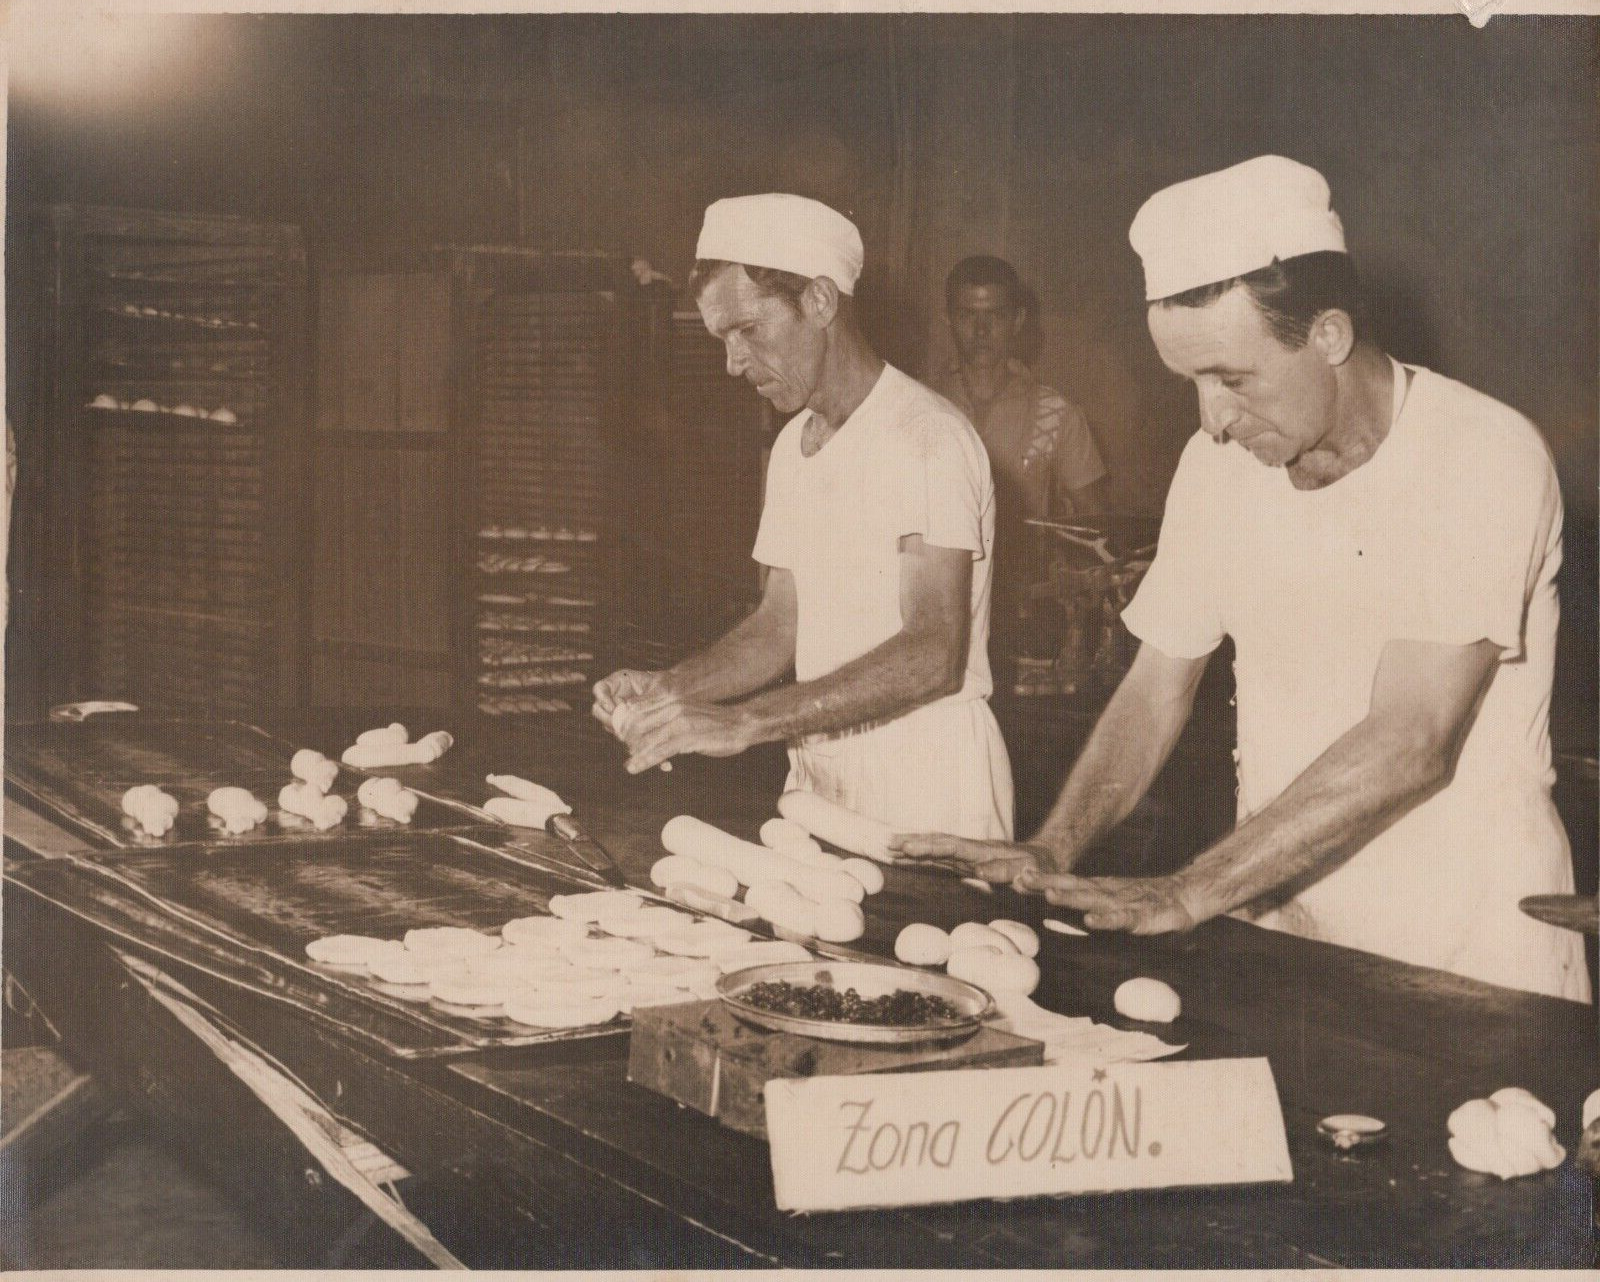 CUBA CUBAN HAVANA WORKER BAKER PORTRAIT 1950s ORIG MIRO Photo C36